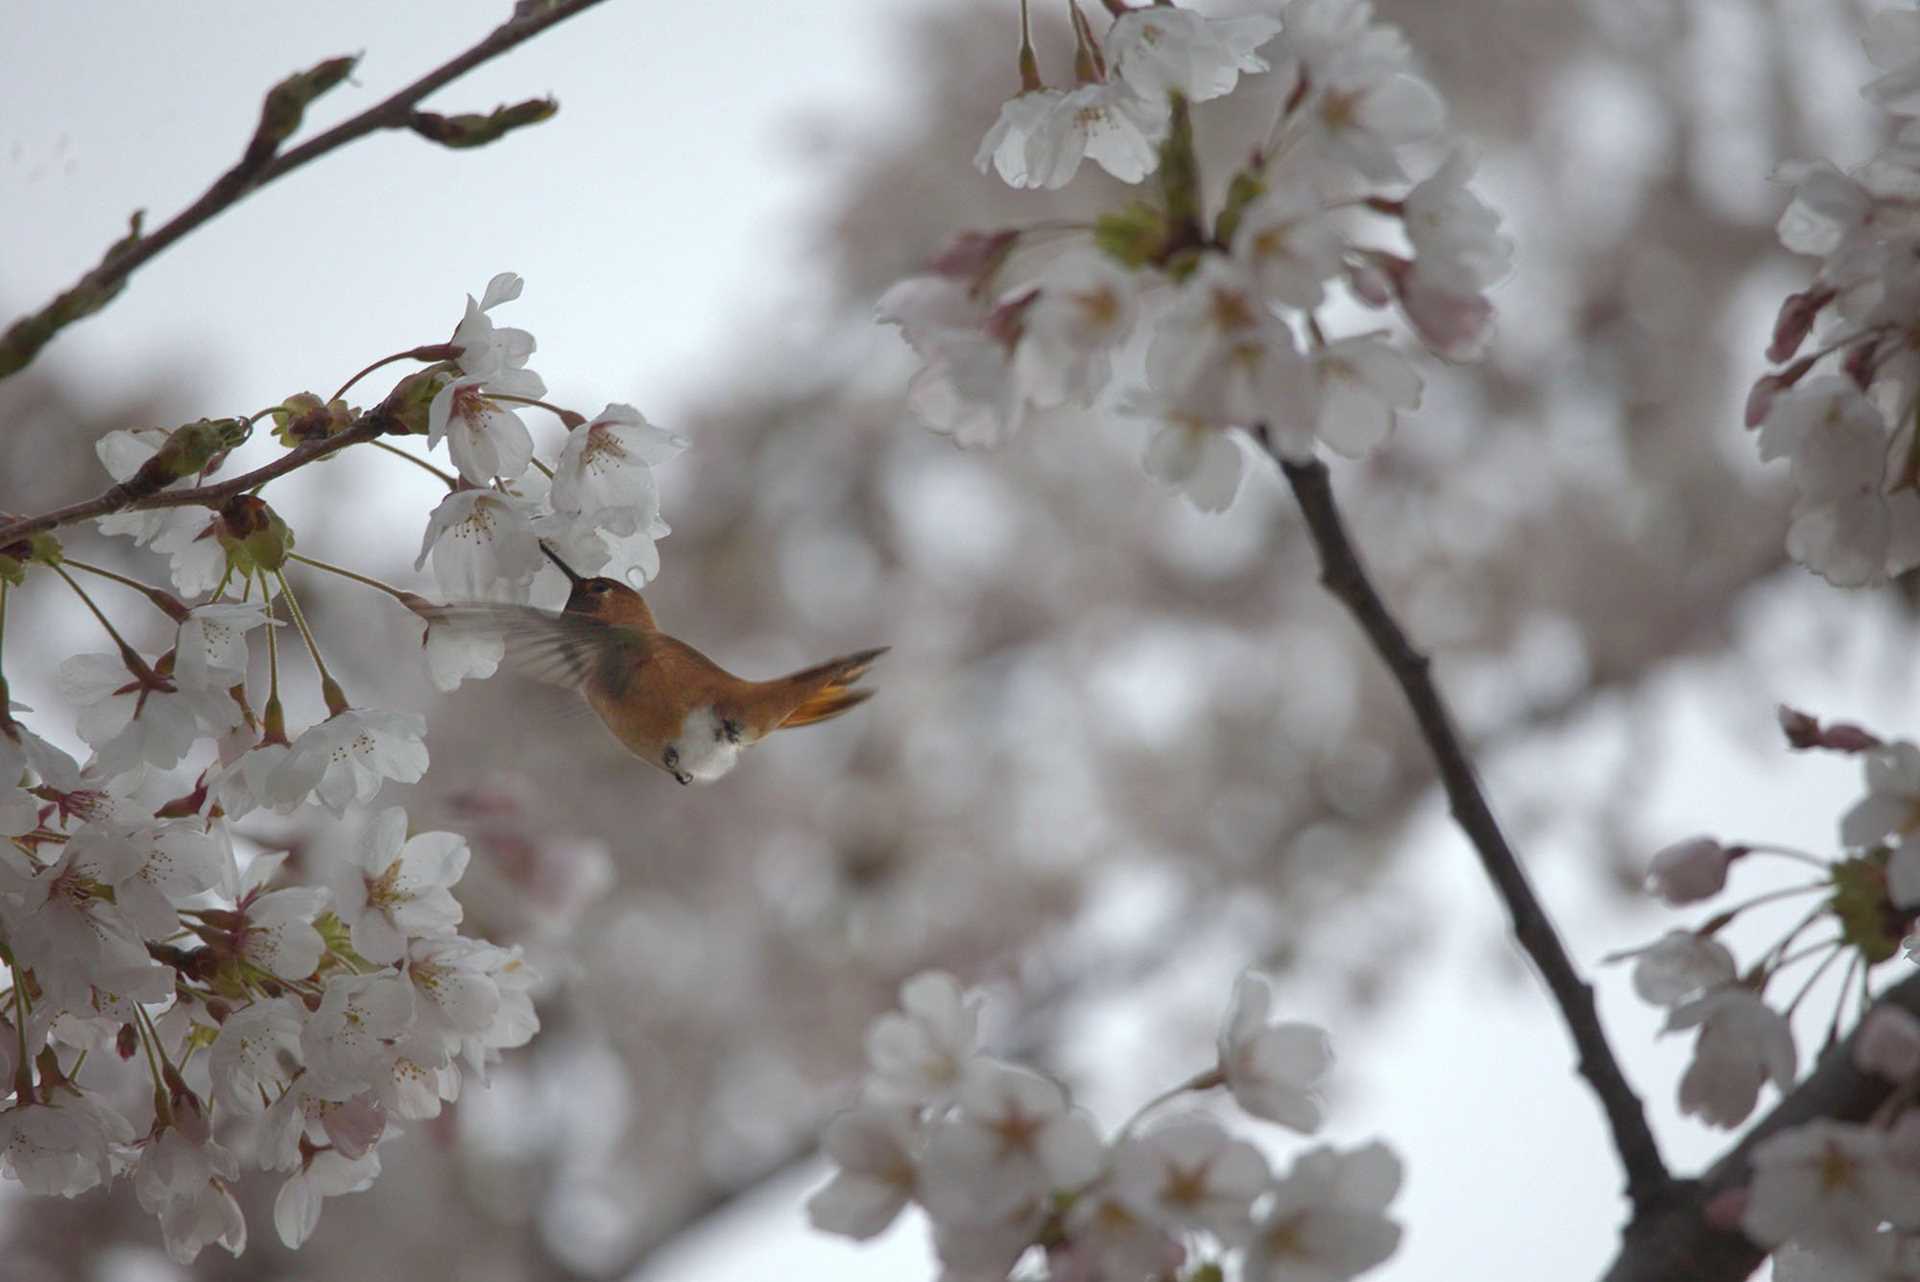 hummingbird among cherry blossoms